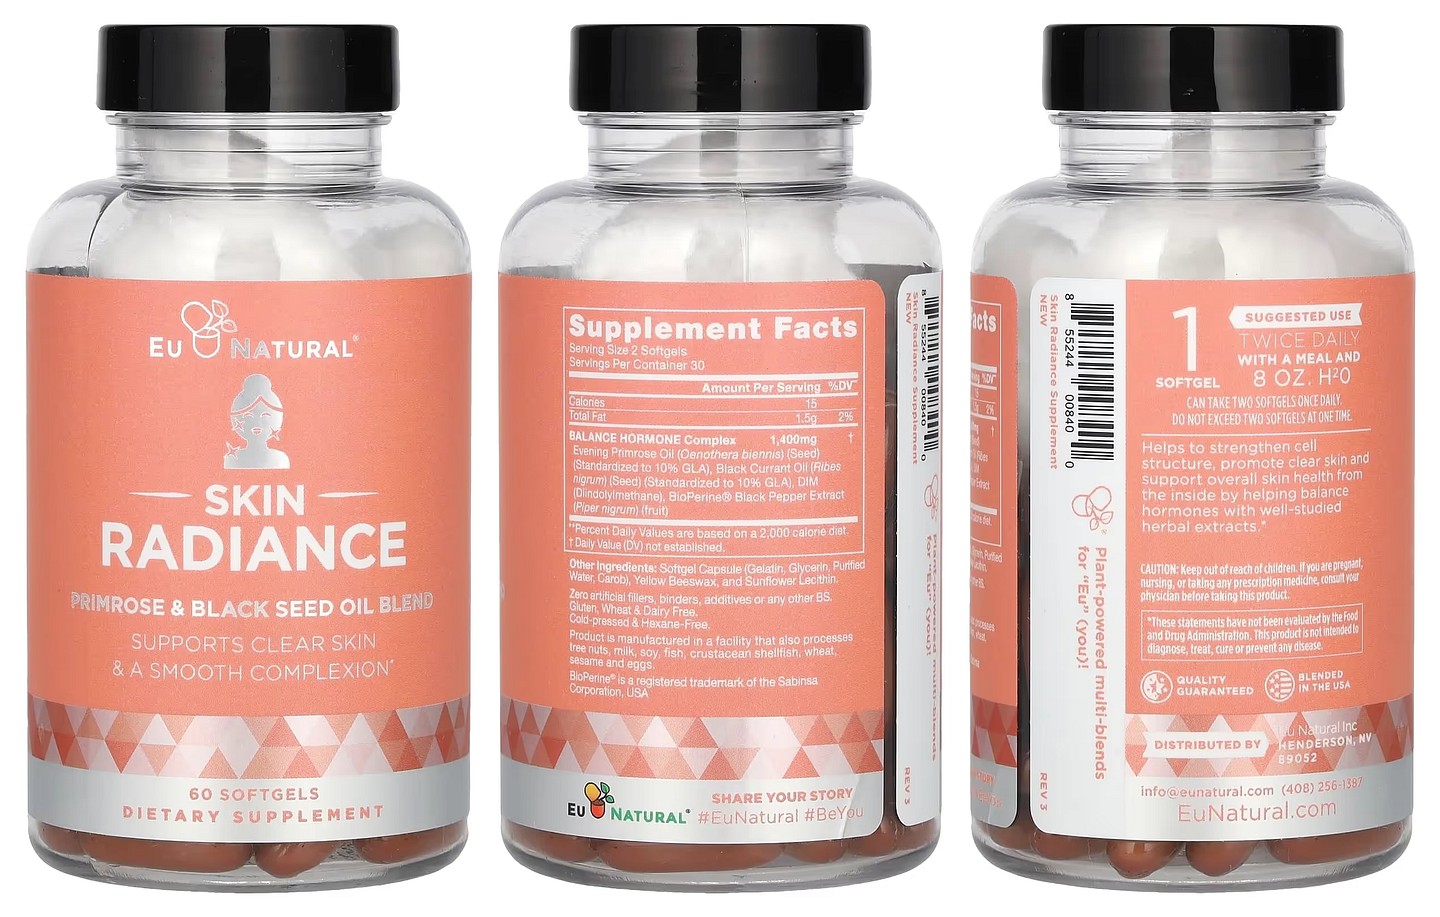 Eu Natural, Skin Radiance packaging